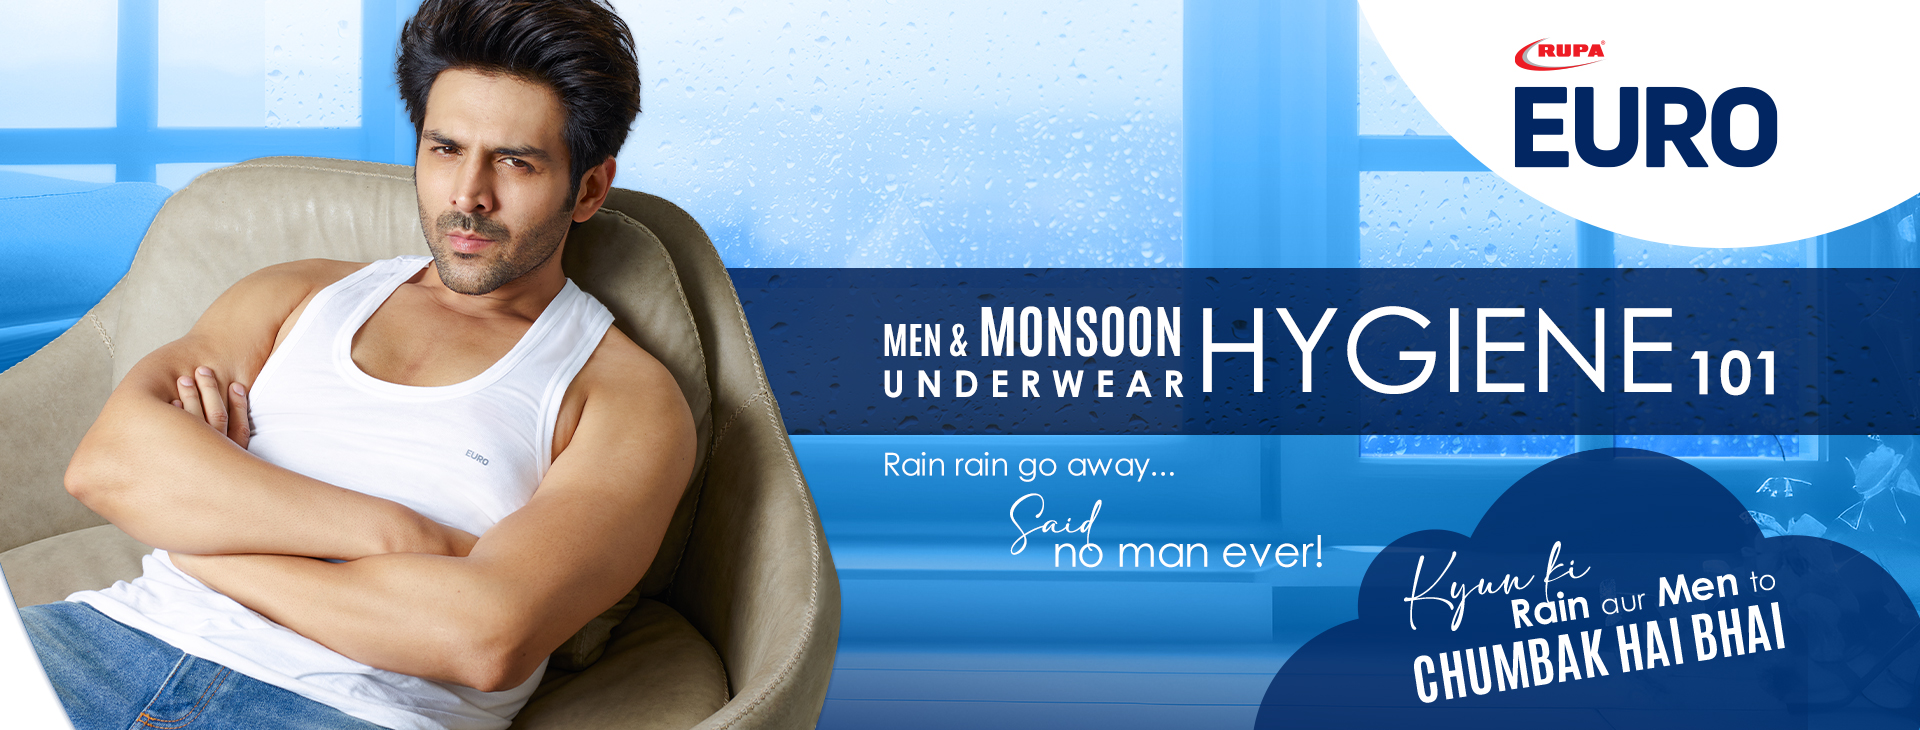  Men & Monsoon Underwear Hygiene 101 